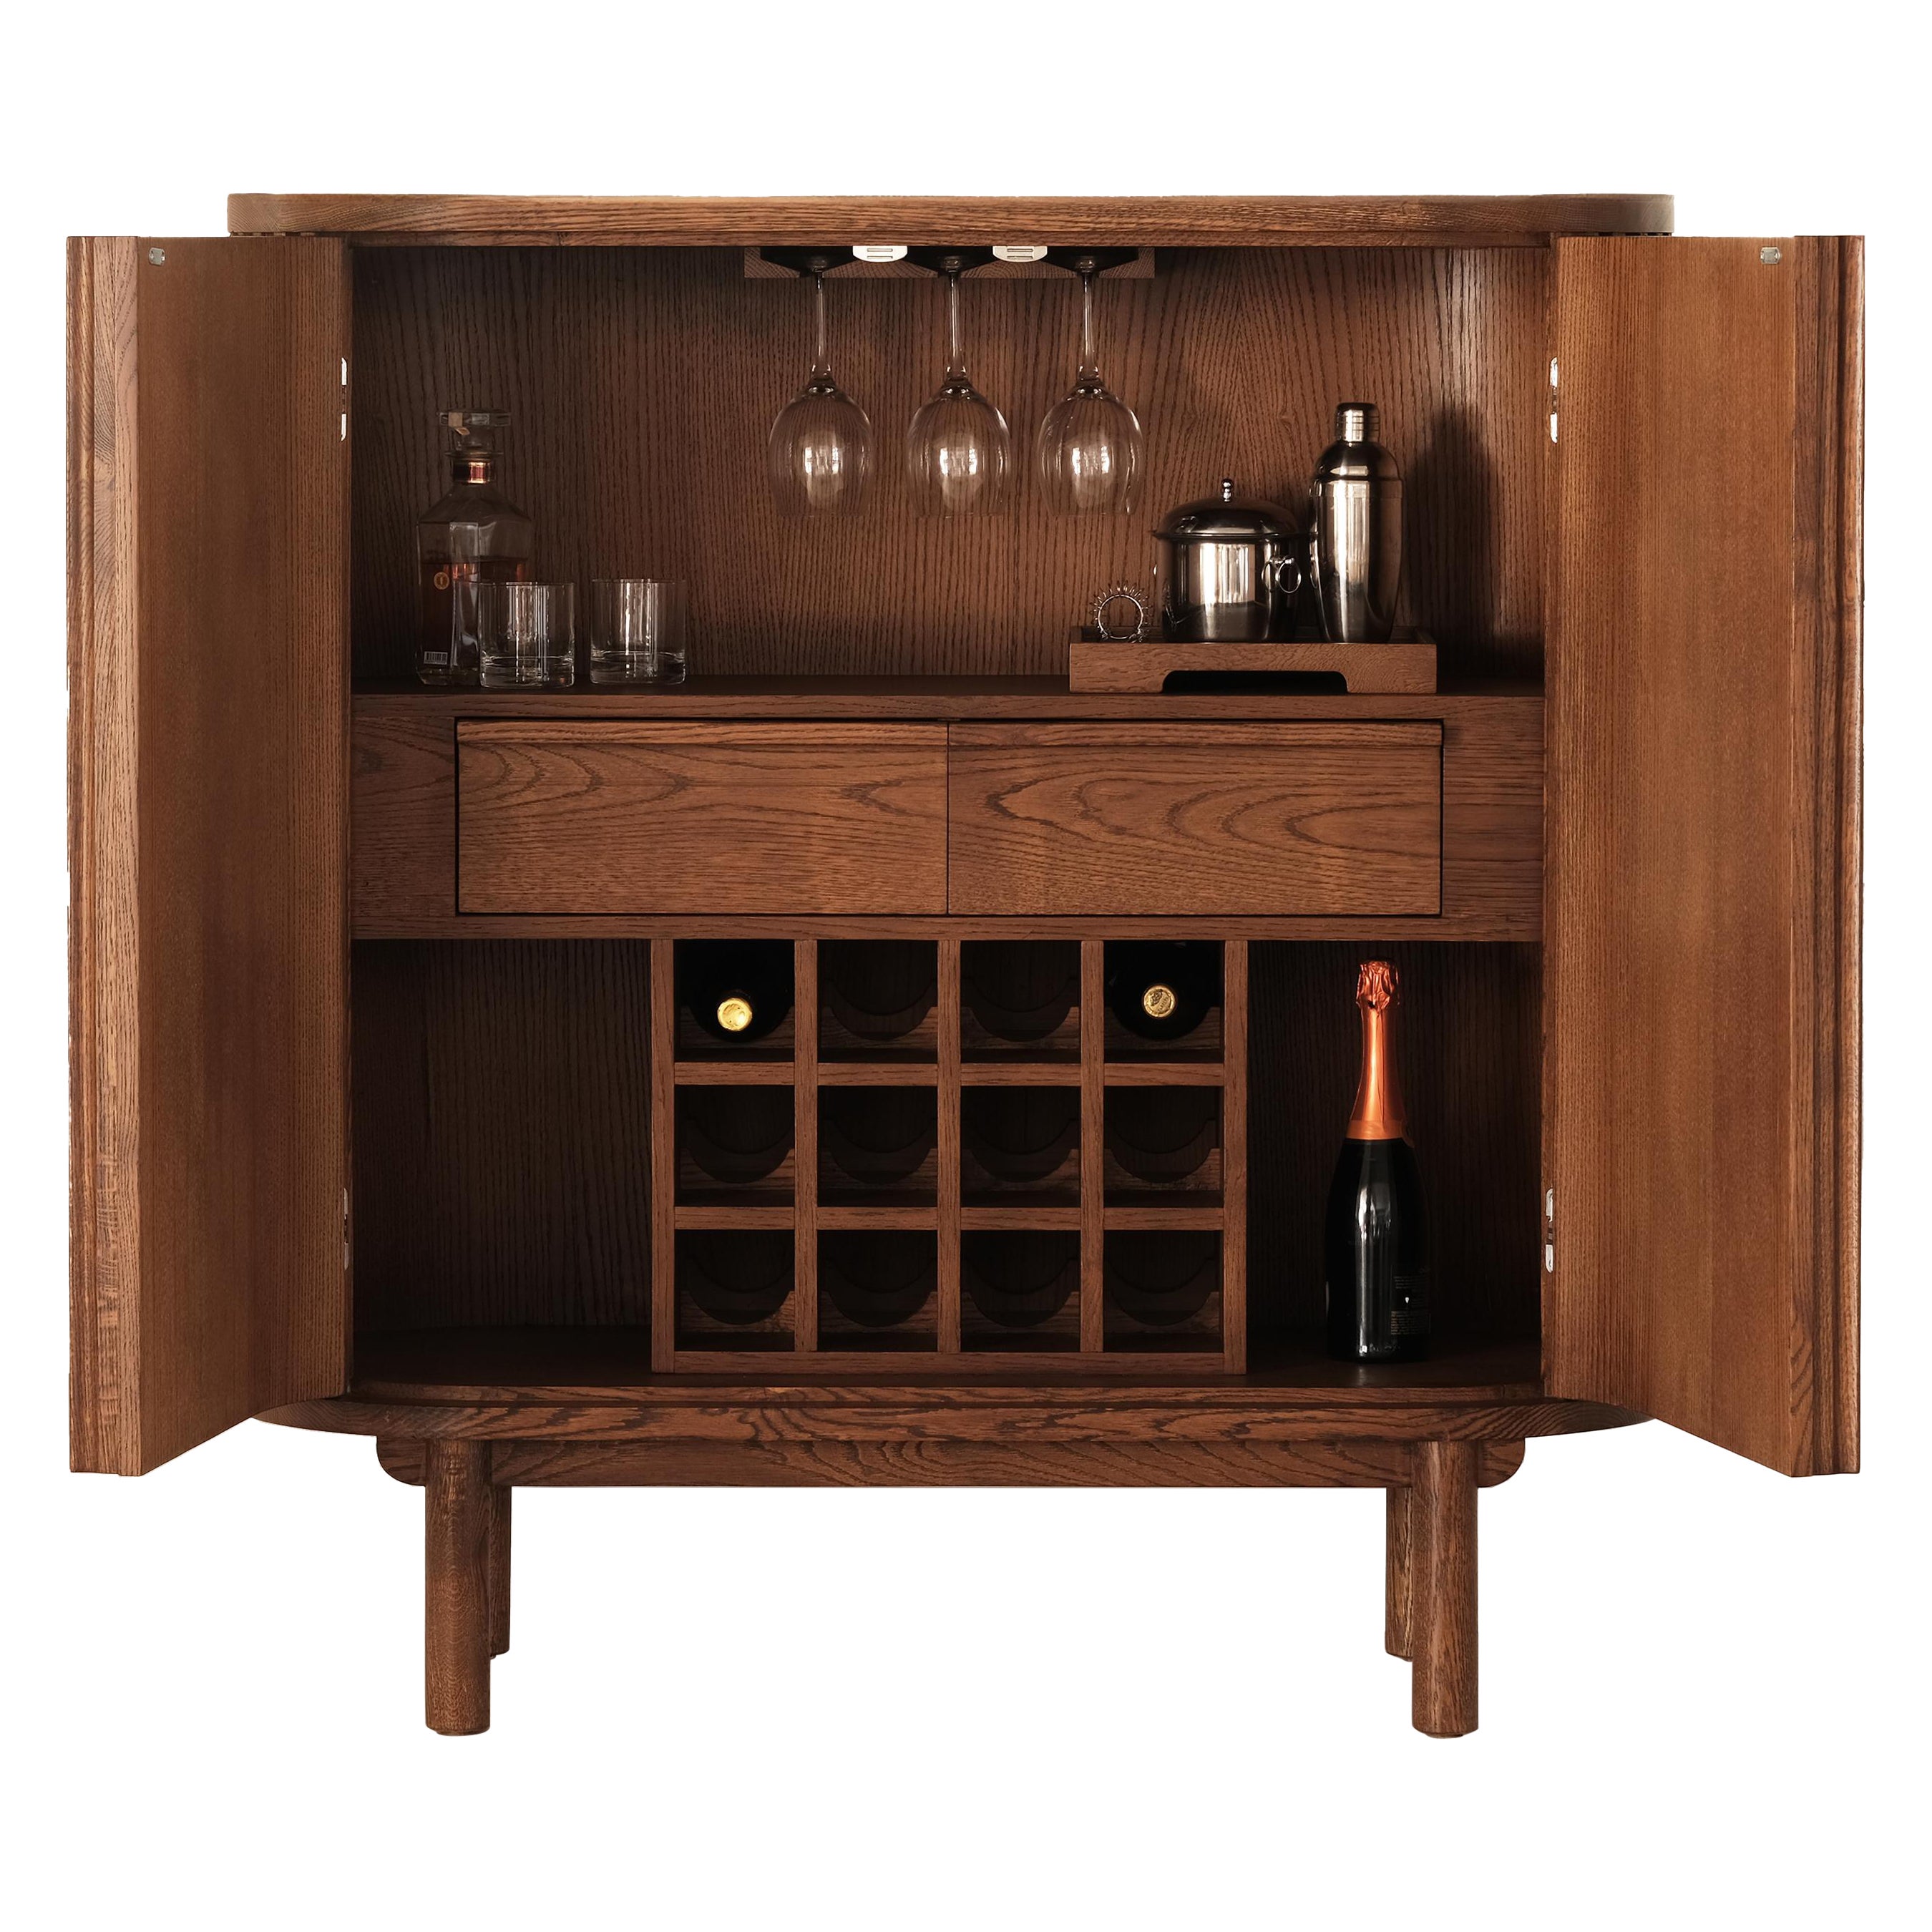 DOCIA Cocktail / Liquor / Bar Cabinet, Oak, Slatted Body For Sale